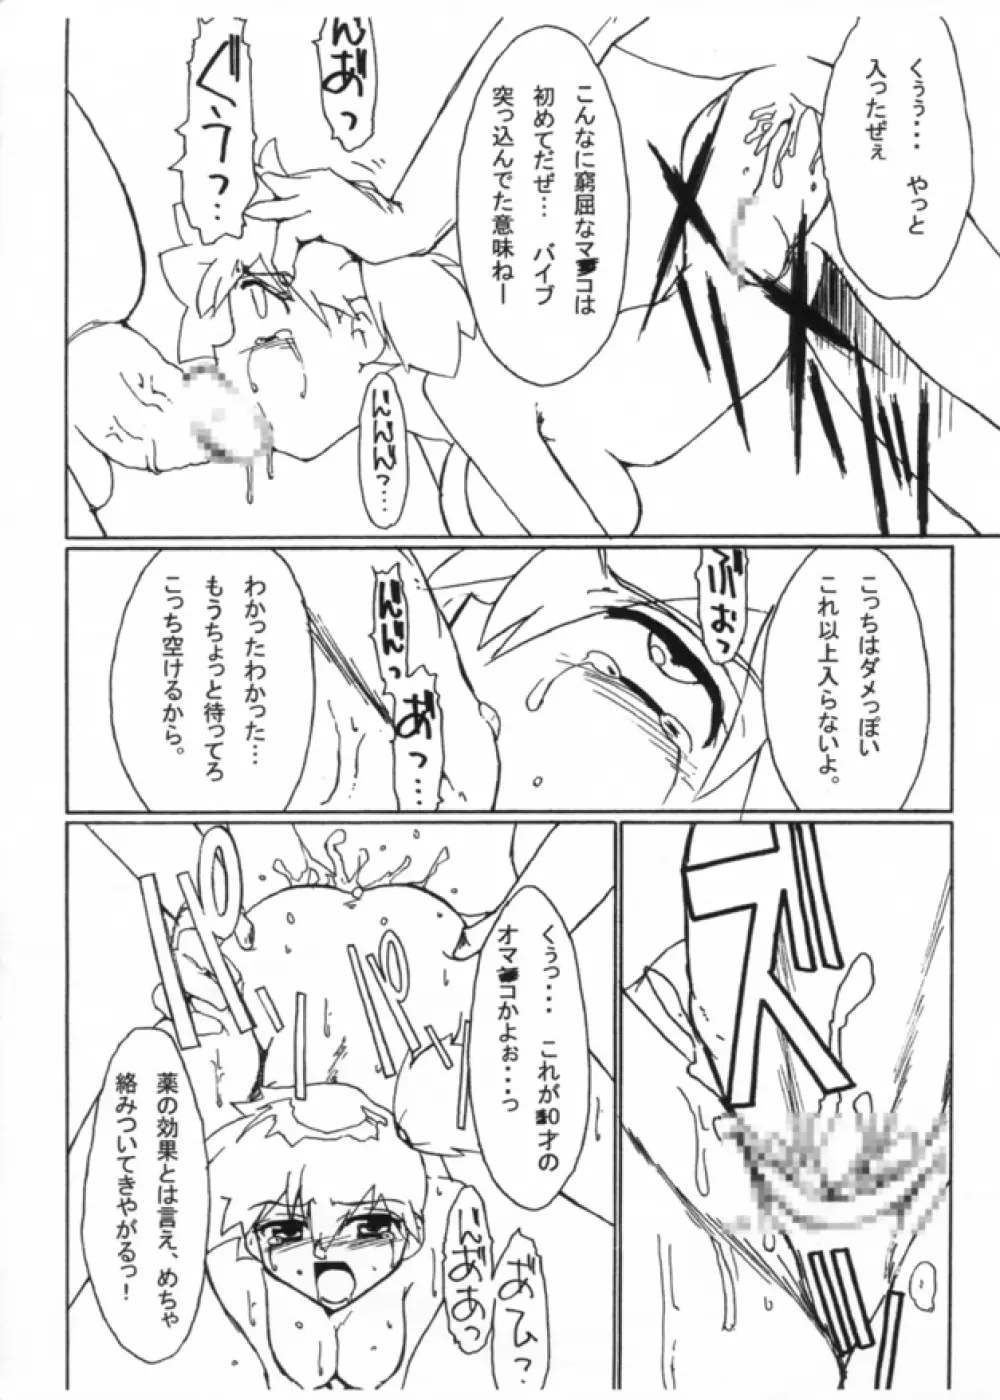 KASUMIX XPLOSION Kasumi Comic part5 - page58